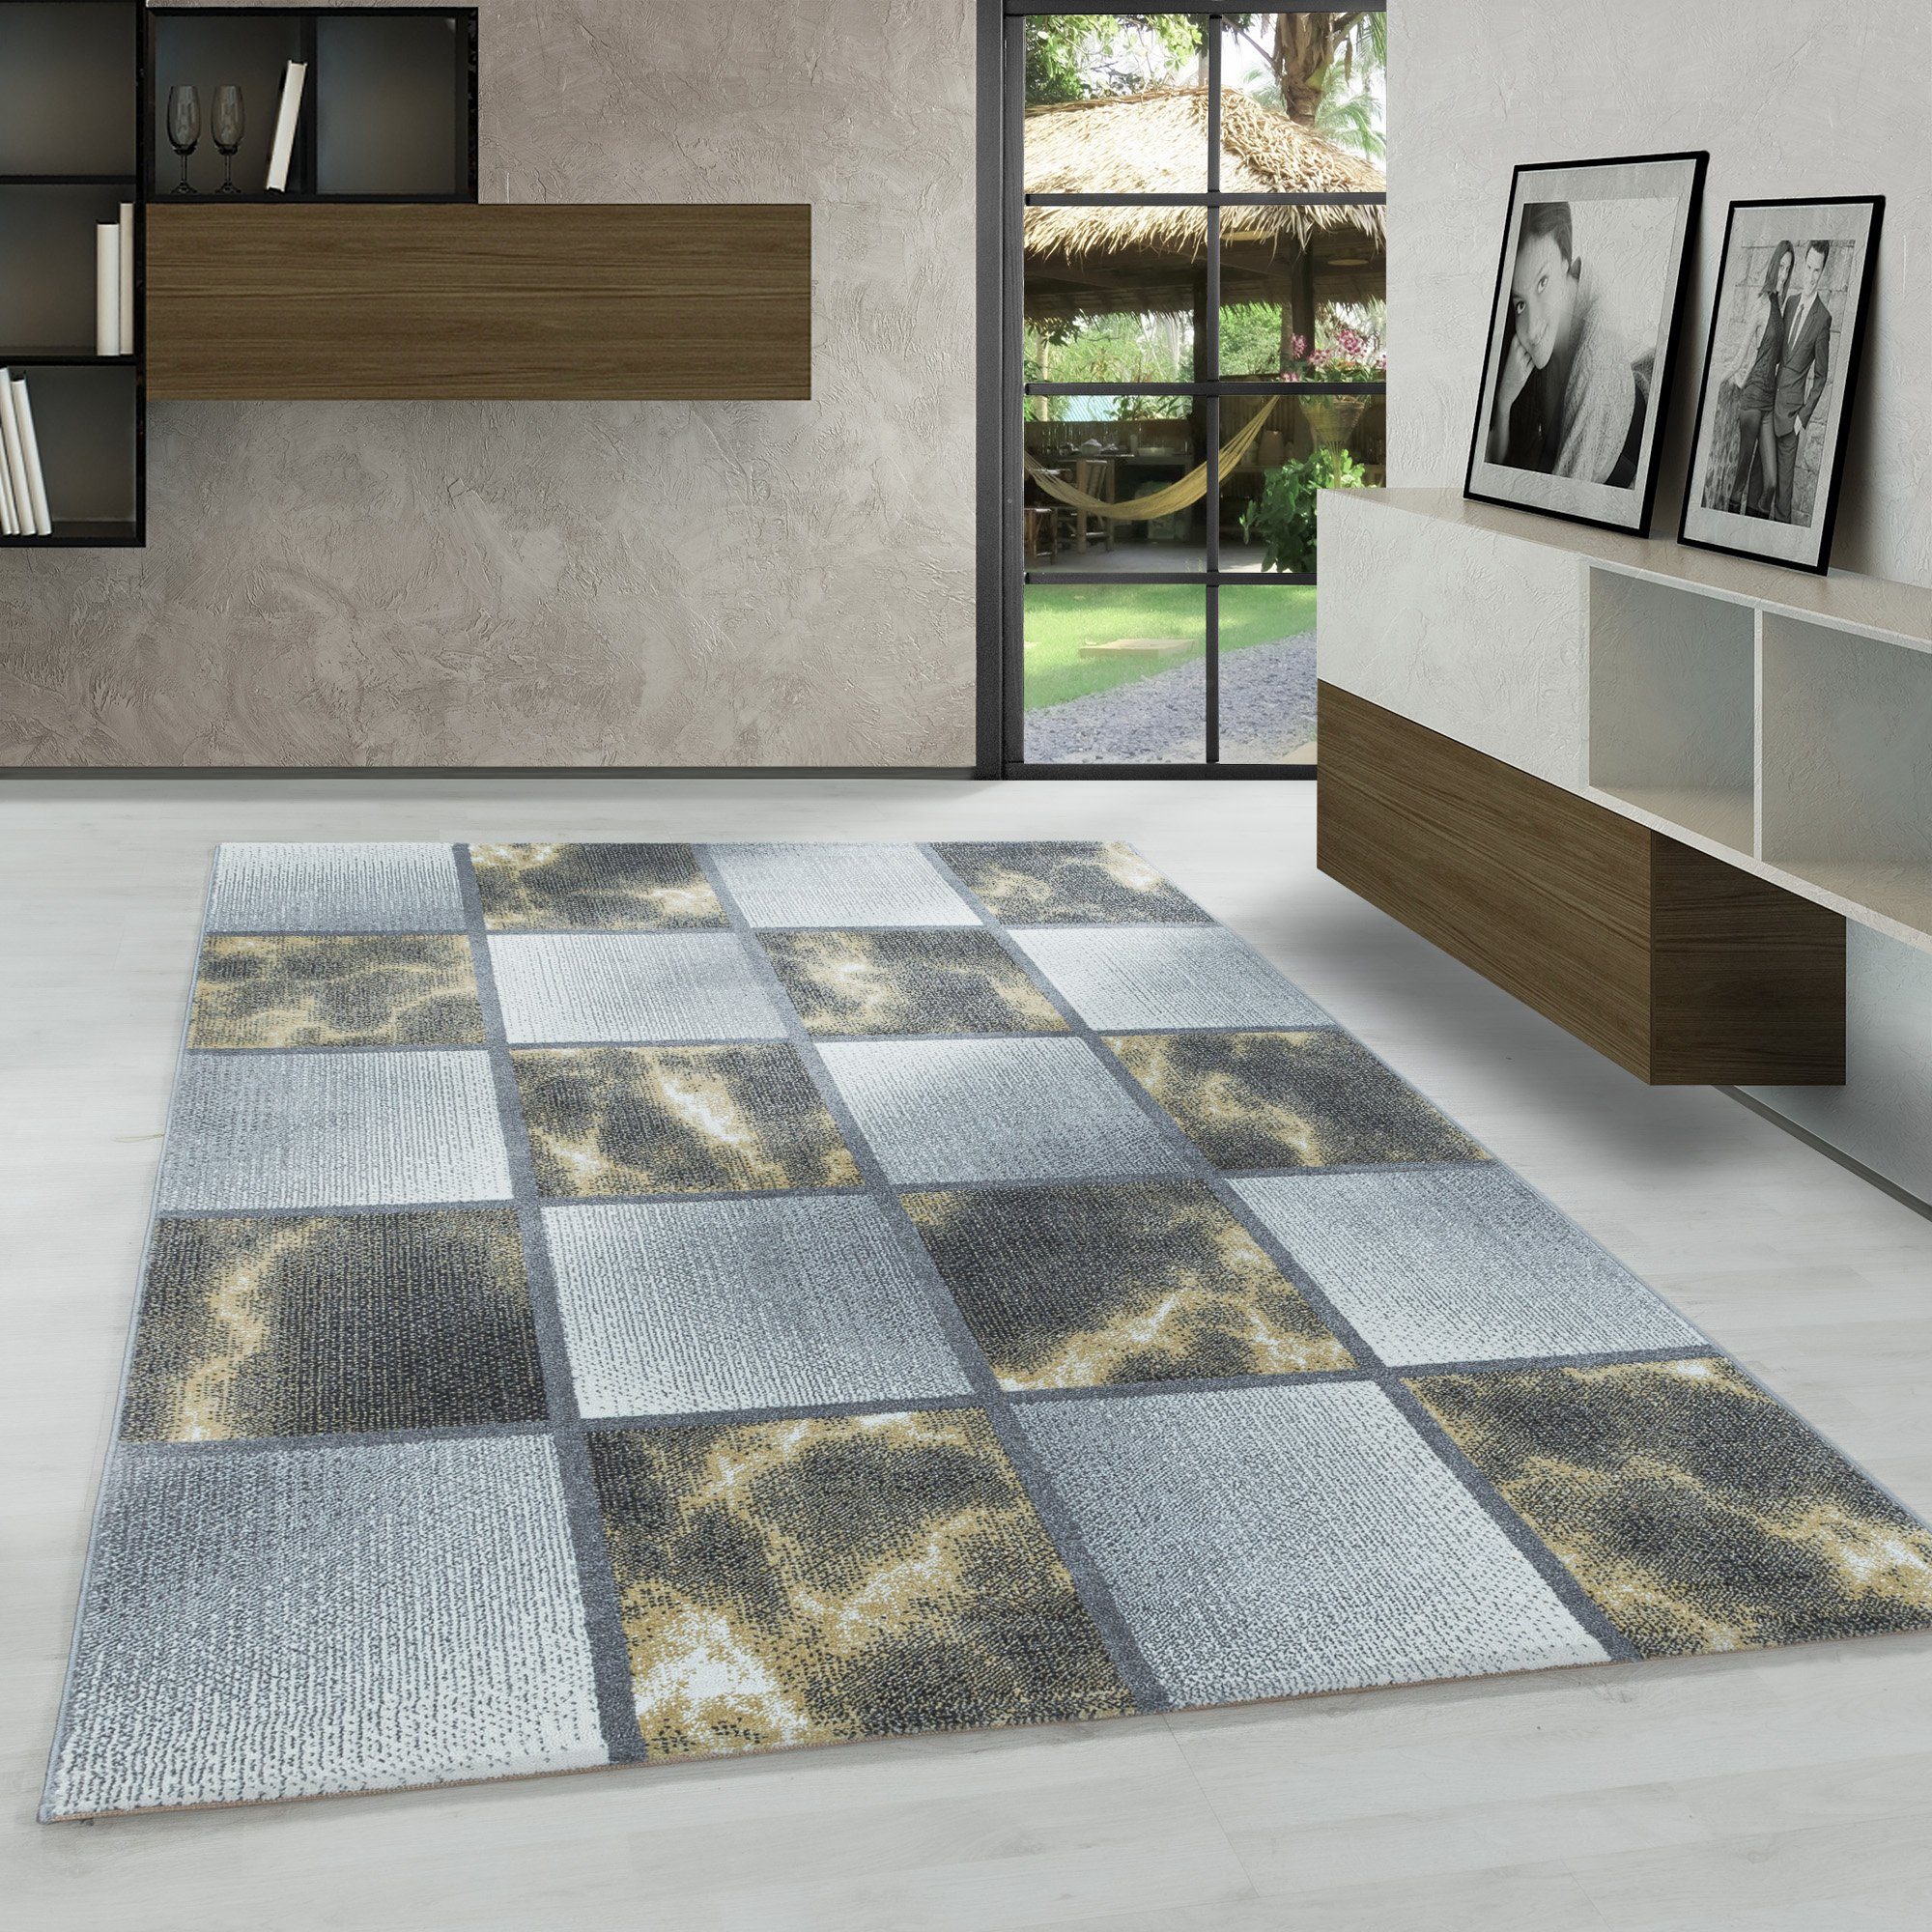 Frisé-Teppich Kariert Design, Carpetsale24, Läufer, Höhe: 8 mm, Kurzflor Teppich Wohnzimmer Kariert Design verschidene größen